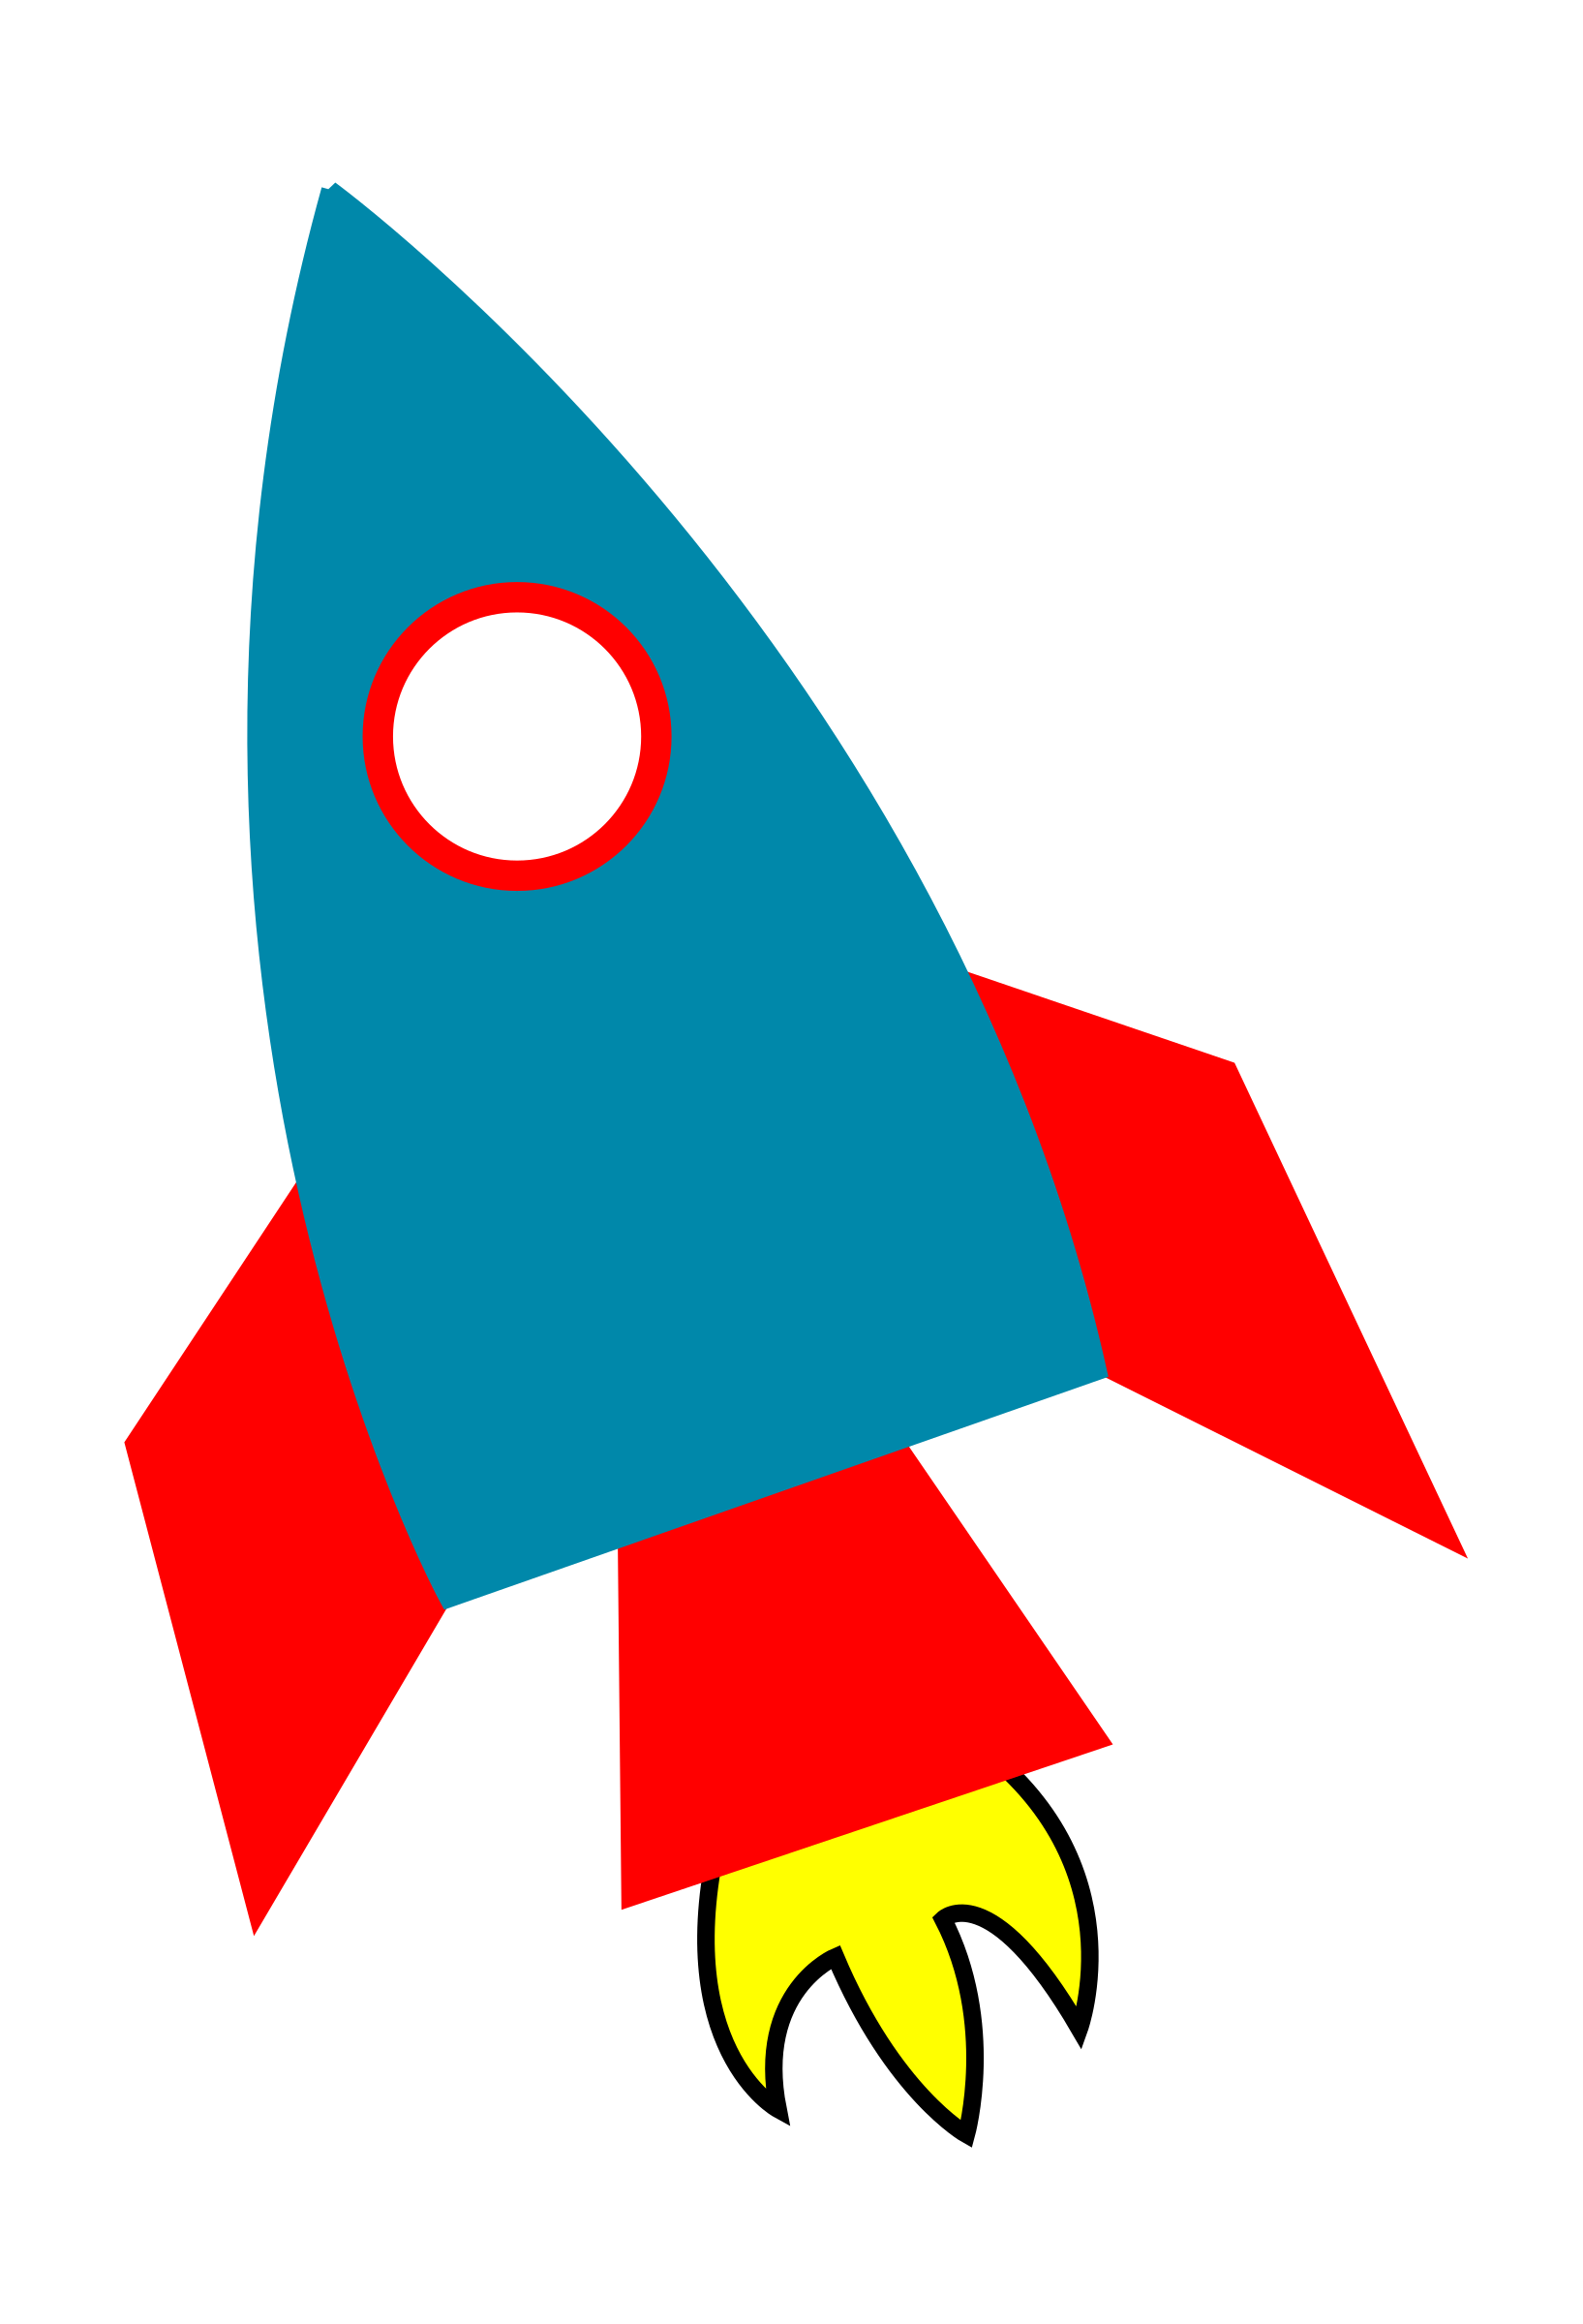 Clipart rocket simple.